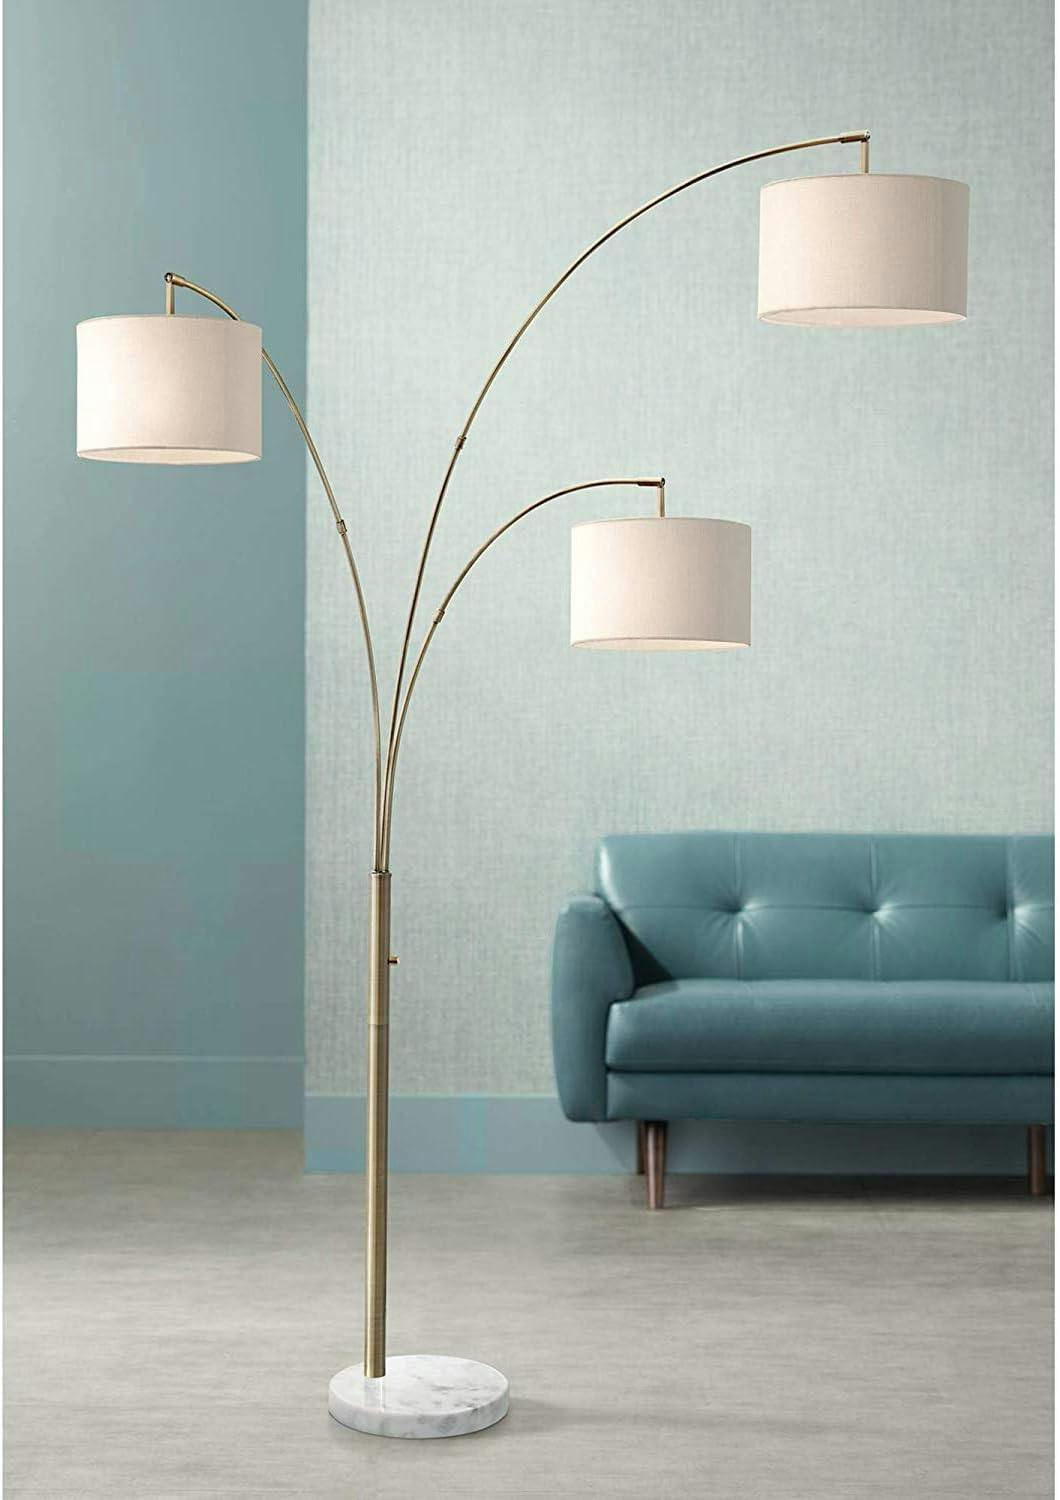 Elegant Antique Brass 3-Arm Adjustable Arc Floor Lamp with Off-White Linen Shades